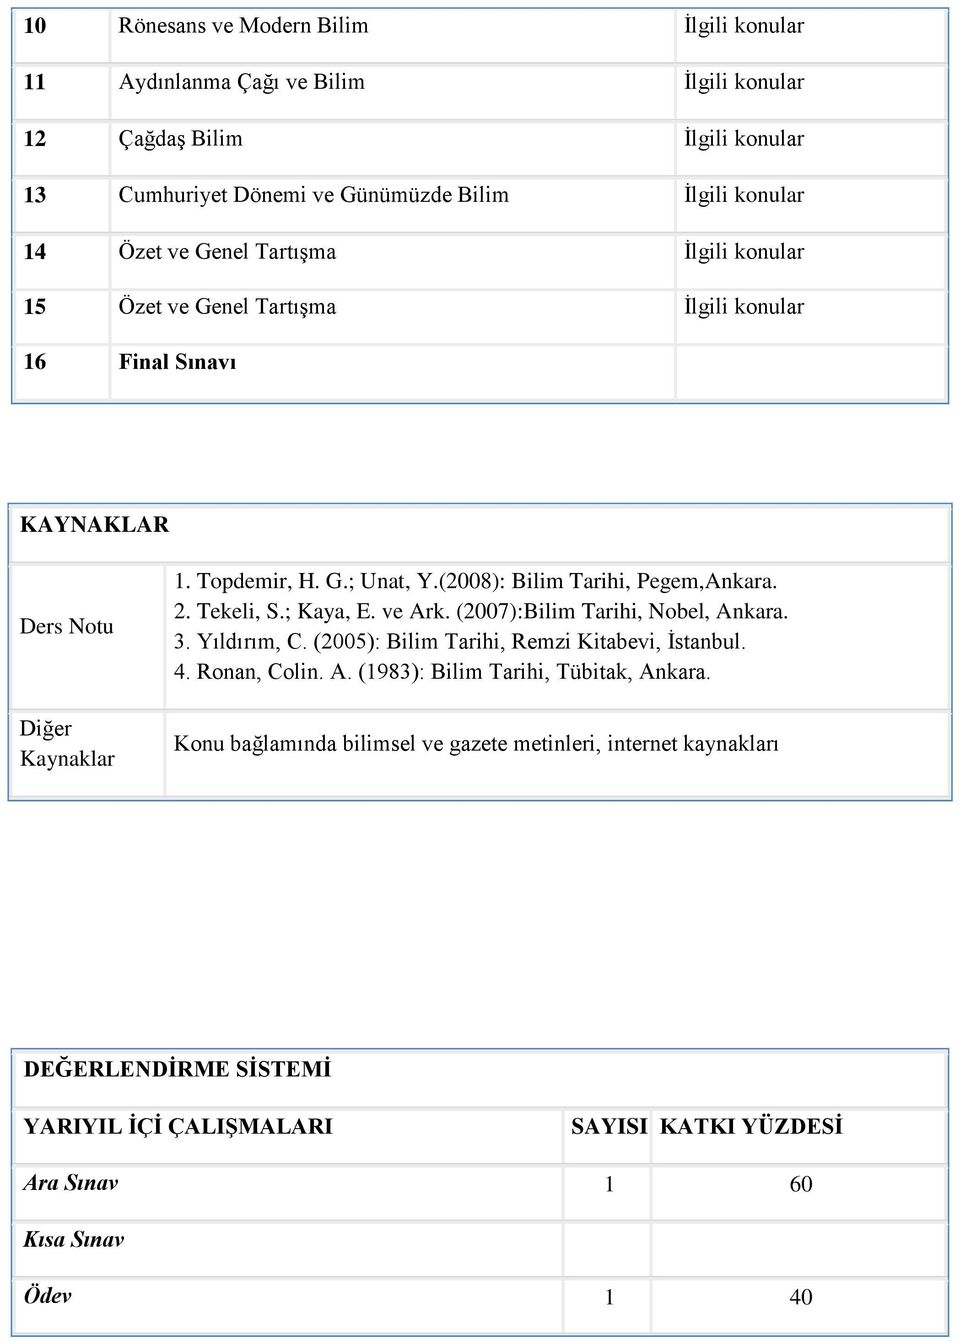 (2008): Bilim Tarihi, Pegem,Ankara. 2. Tekeli, S.; Kaya, E. ve Ark. (2007):Bilim Tarihi, Nobel, Ankara. 3. Yıldırım, C. (2005): Bilim Tarihi, Remzi Kitabevi, İstanbul. 4.